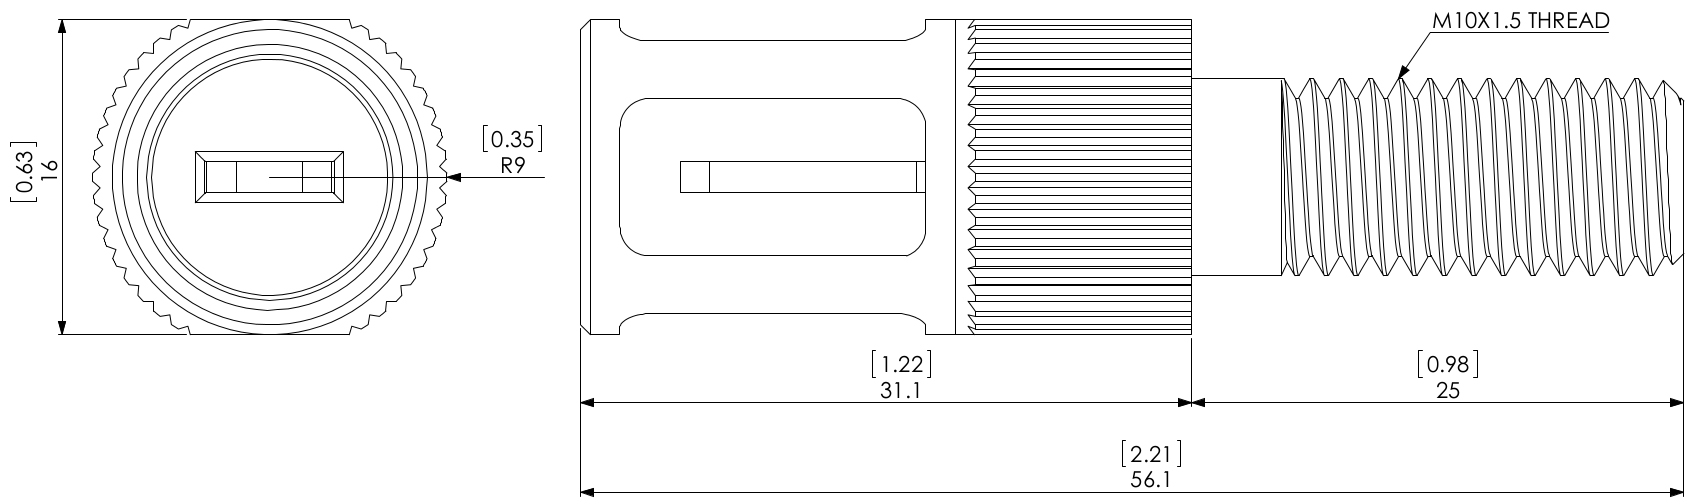 Celsius Fast-Response ±0.1°C Temperature Sensor (PCB)- Click to Enlarge